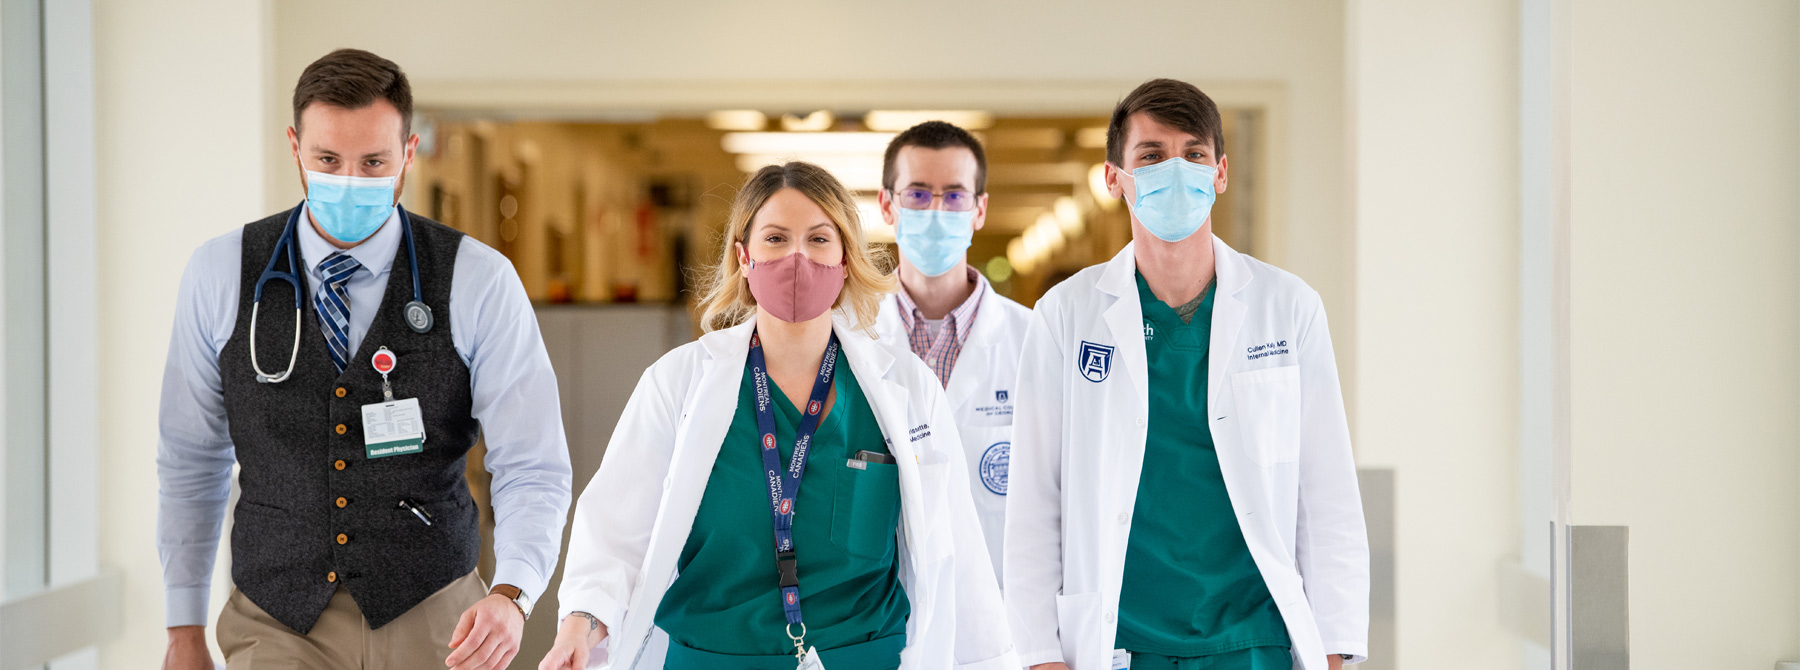 Medical students wearing masks